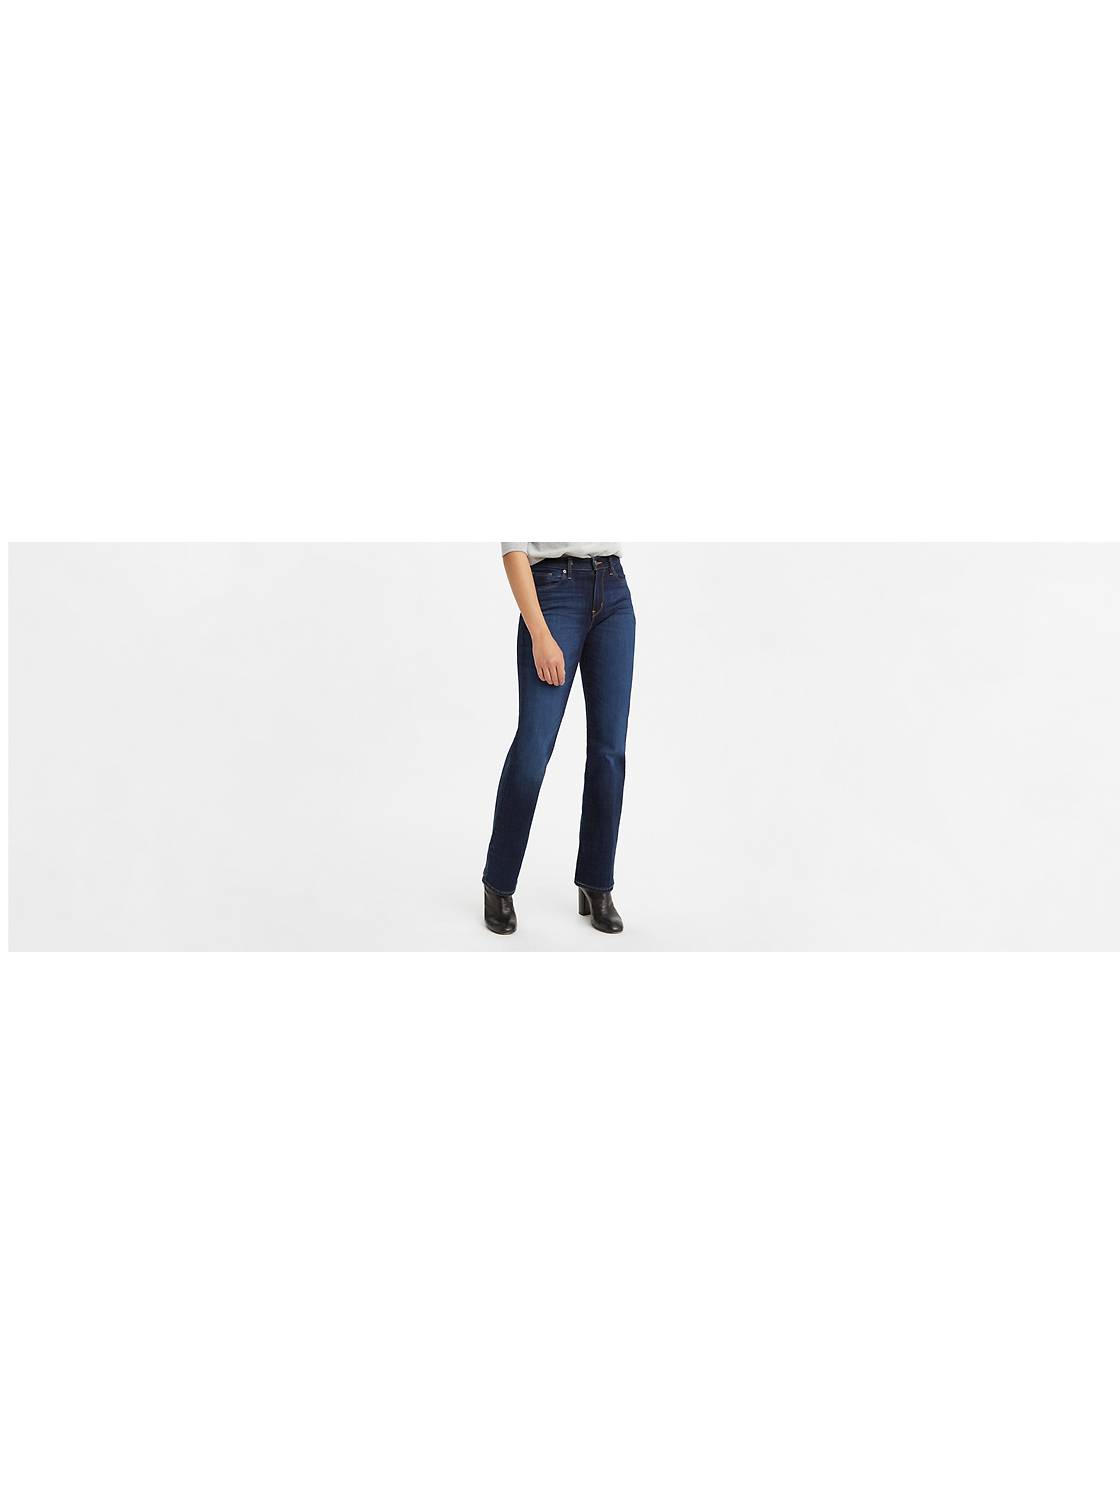 Bootcut Jeans: Shop Flare Jeans & More| Levi's® US